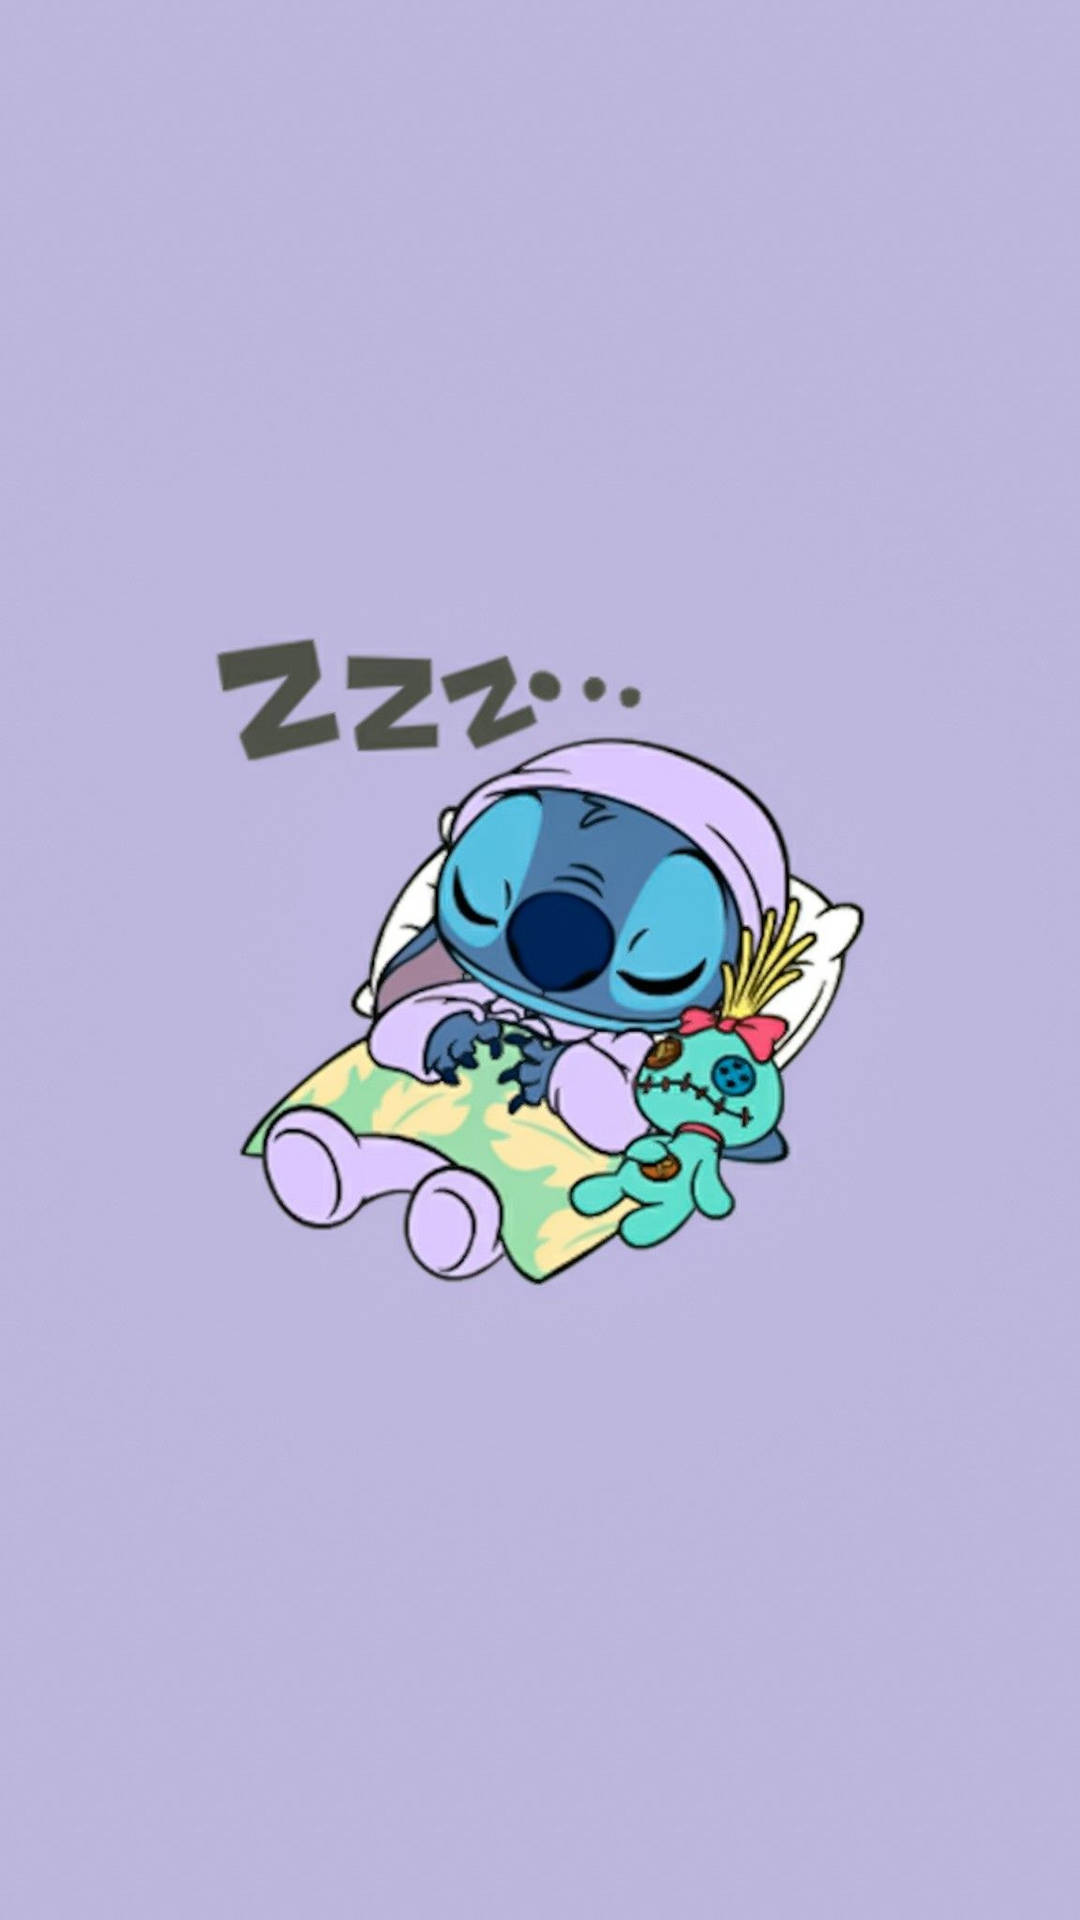 Sleeping Cute Stitch Wallpaper